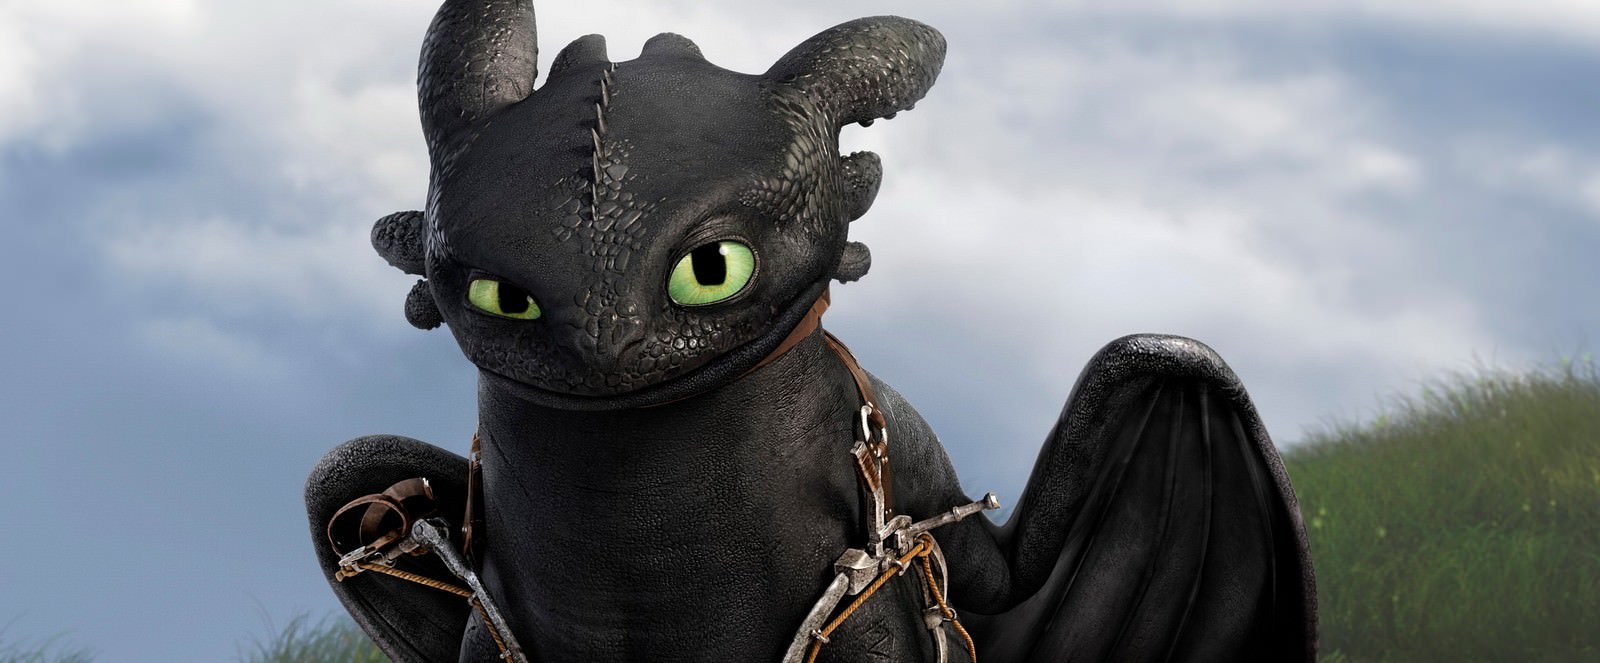 Movie, How to Train Your Dragon: The Hidden World(美國, 2019年) / 馴龍高手3(台灣) /馴龍記3(香港) / 驯龙高手3(中國), 電影角色與配音介紹